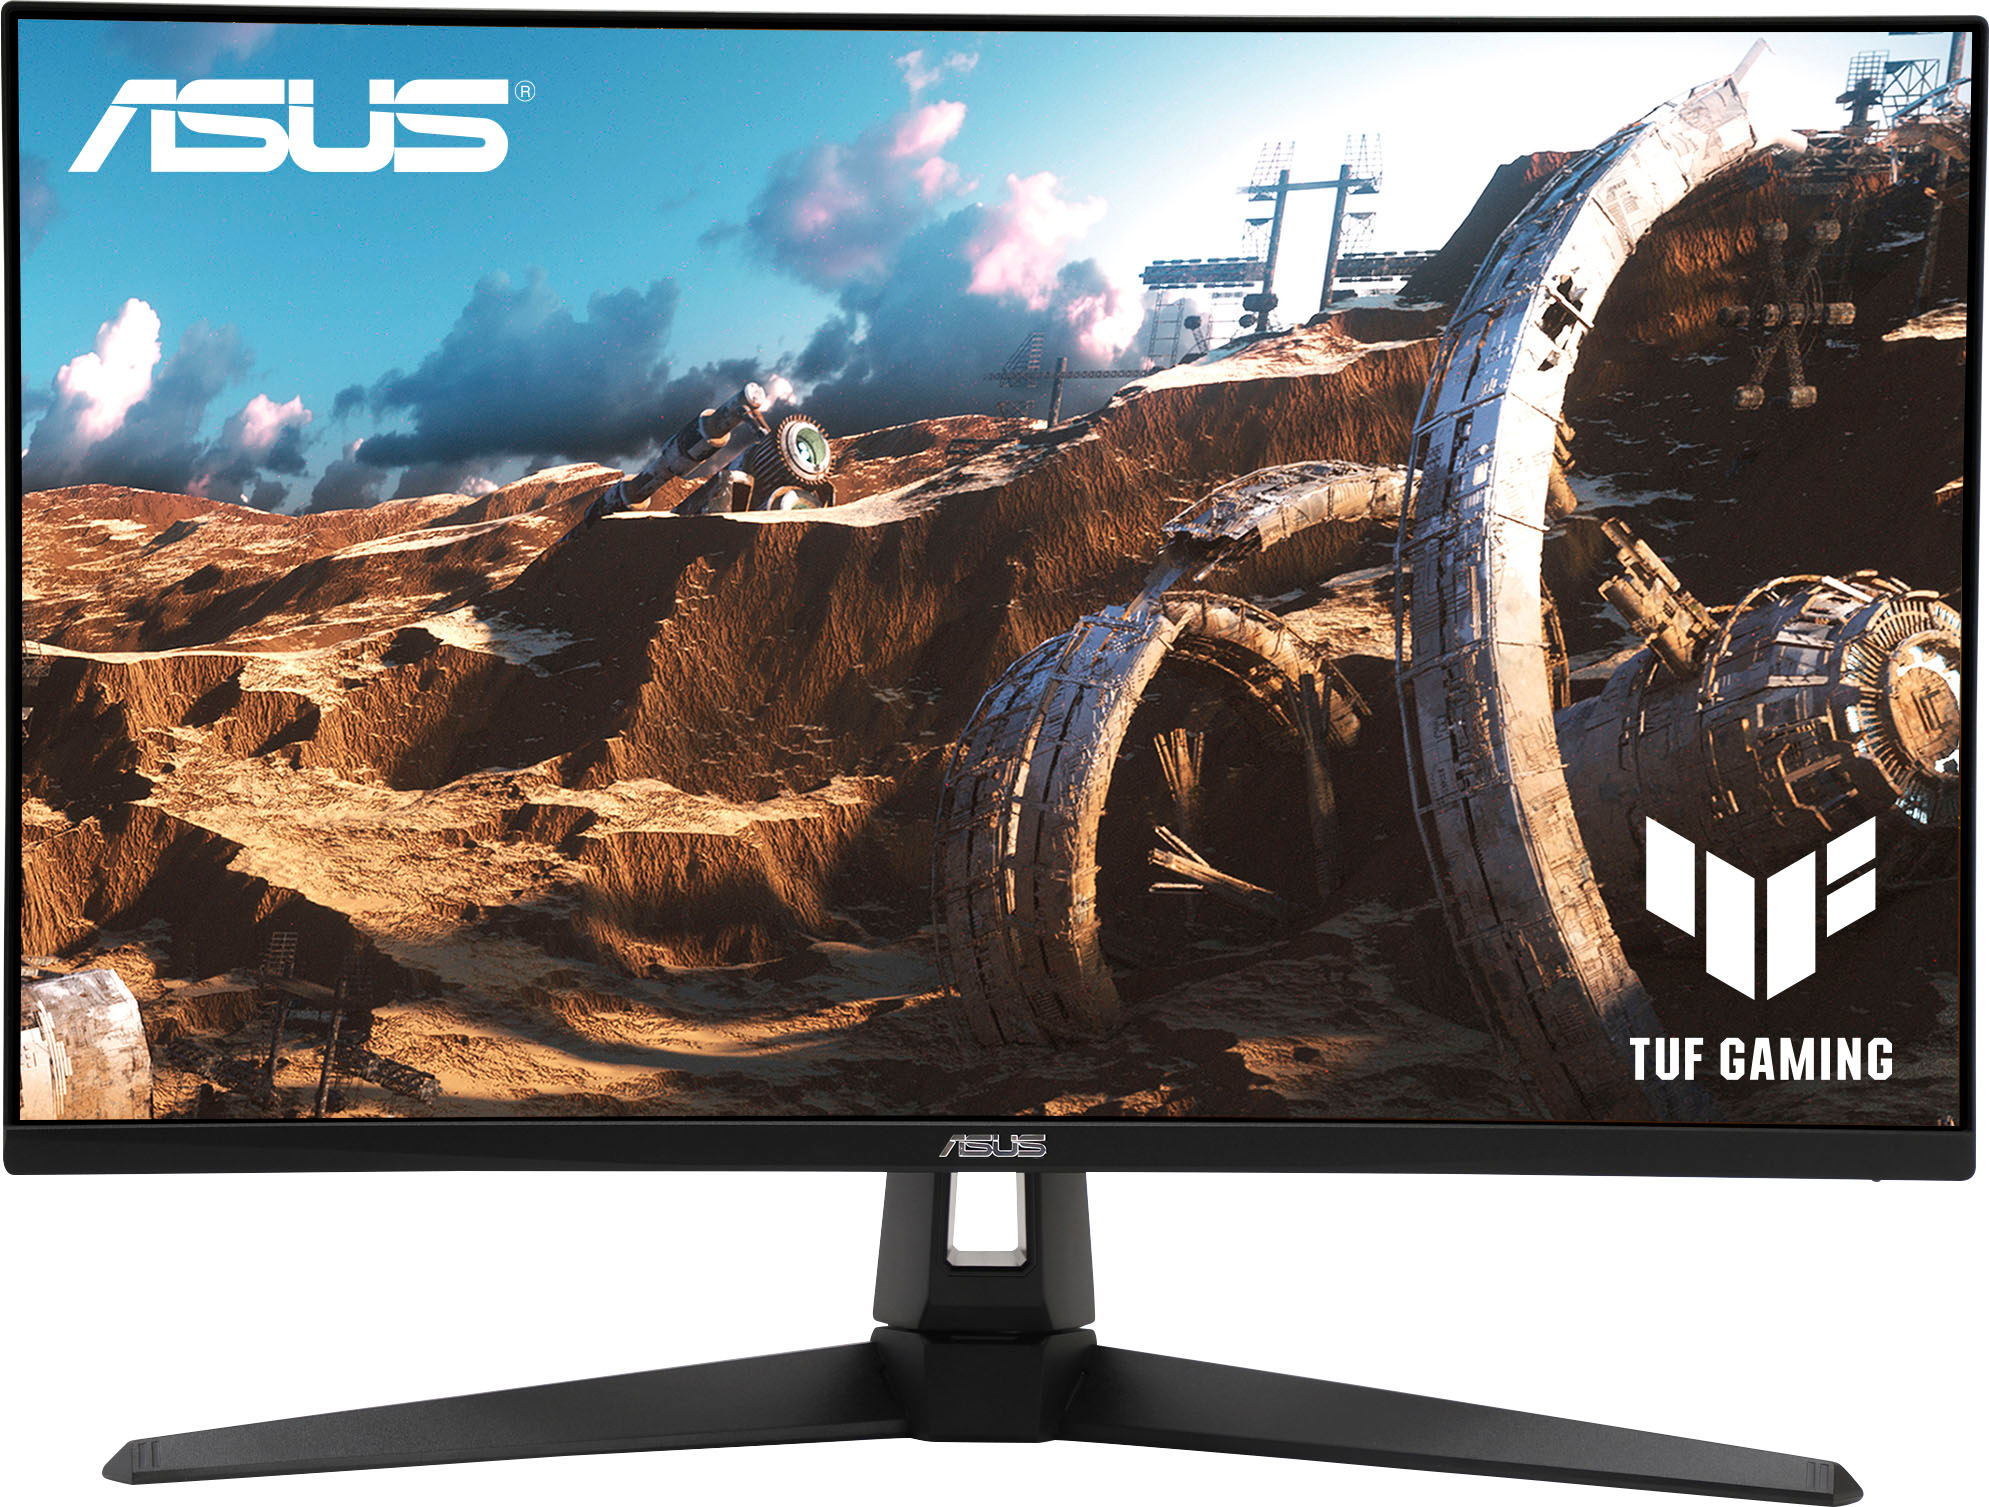 ASUS - TUF Gaming 27" LCD Widescreen Adaptive Sync Monitor (2 x HDMI, DisplayPort) - Black